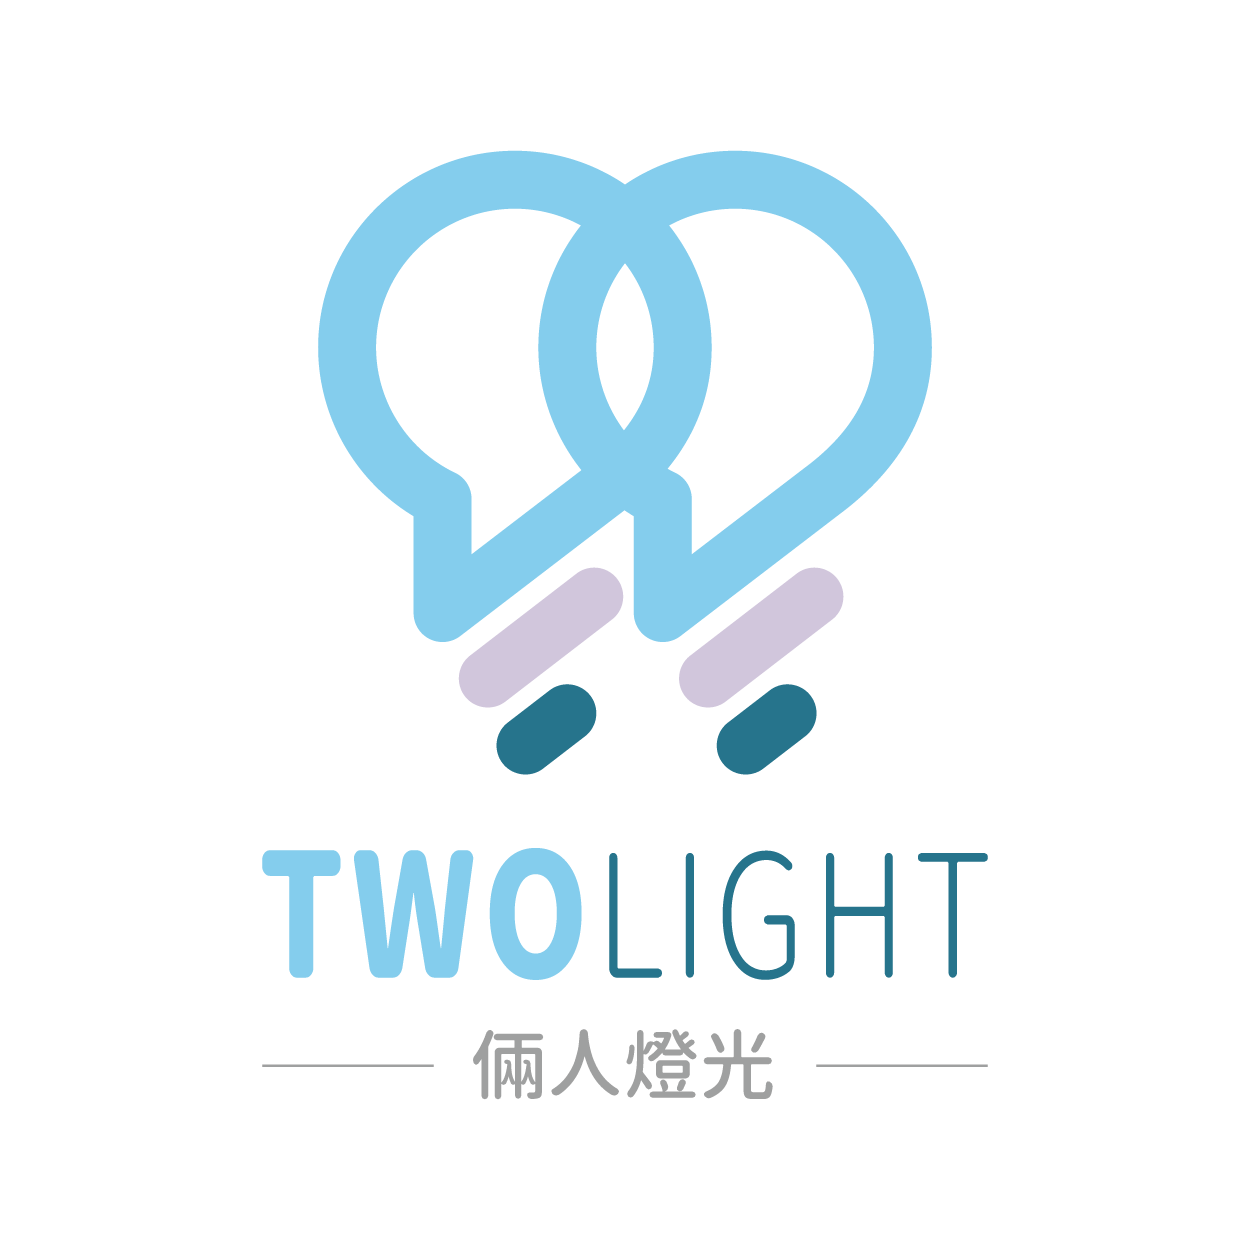 Twolight056